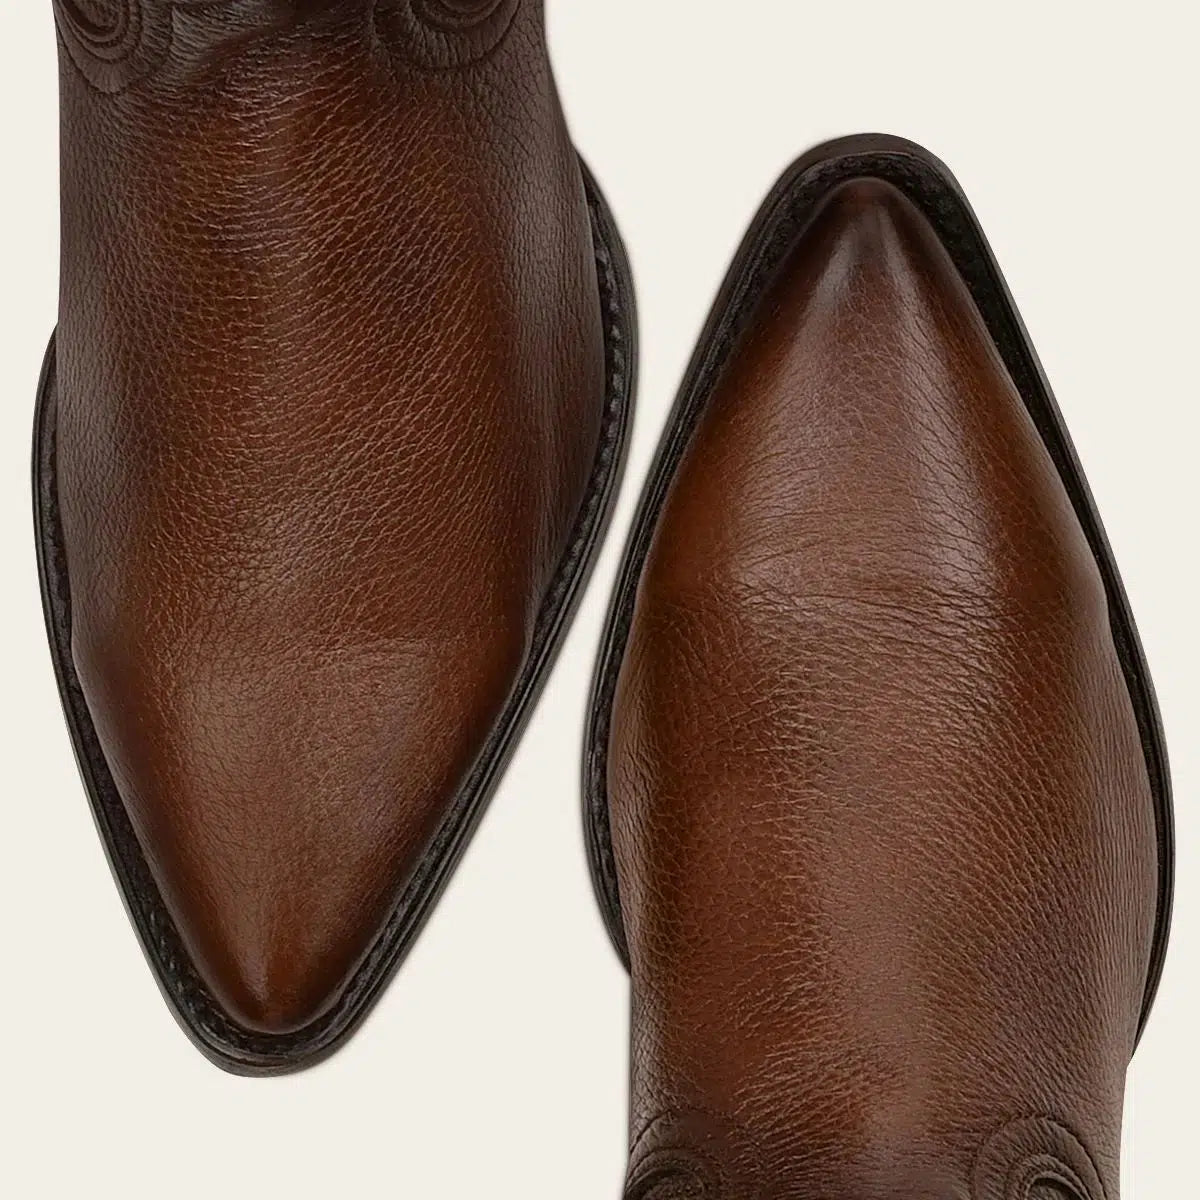 B22PVE - Cuadra brown dress cowboy deer leather boots for men-Kuet.us